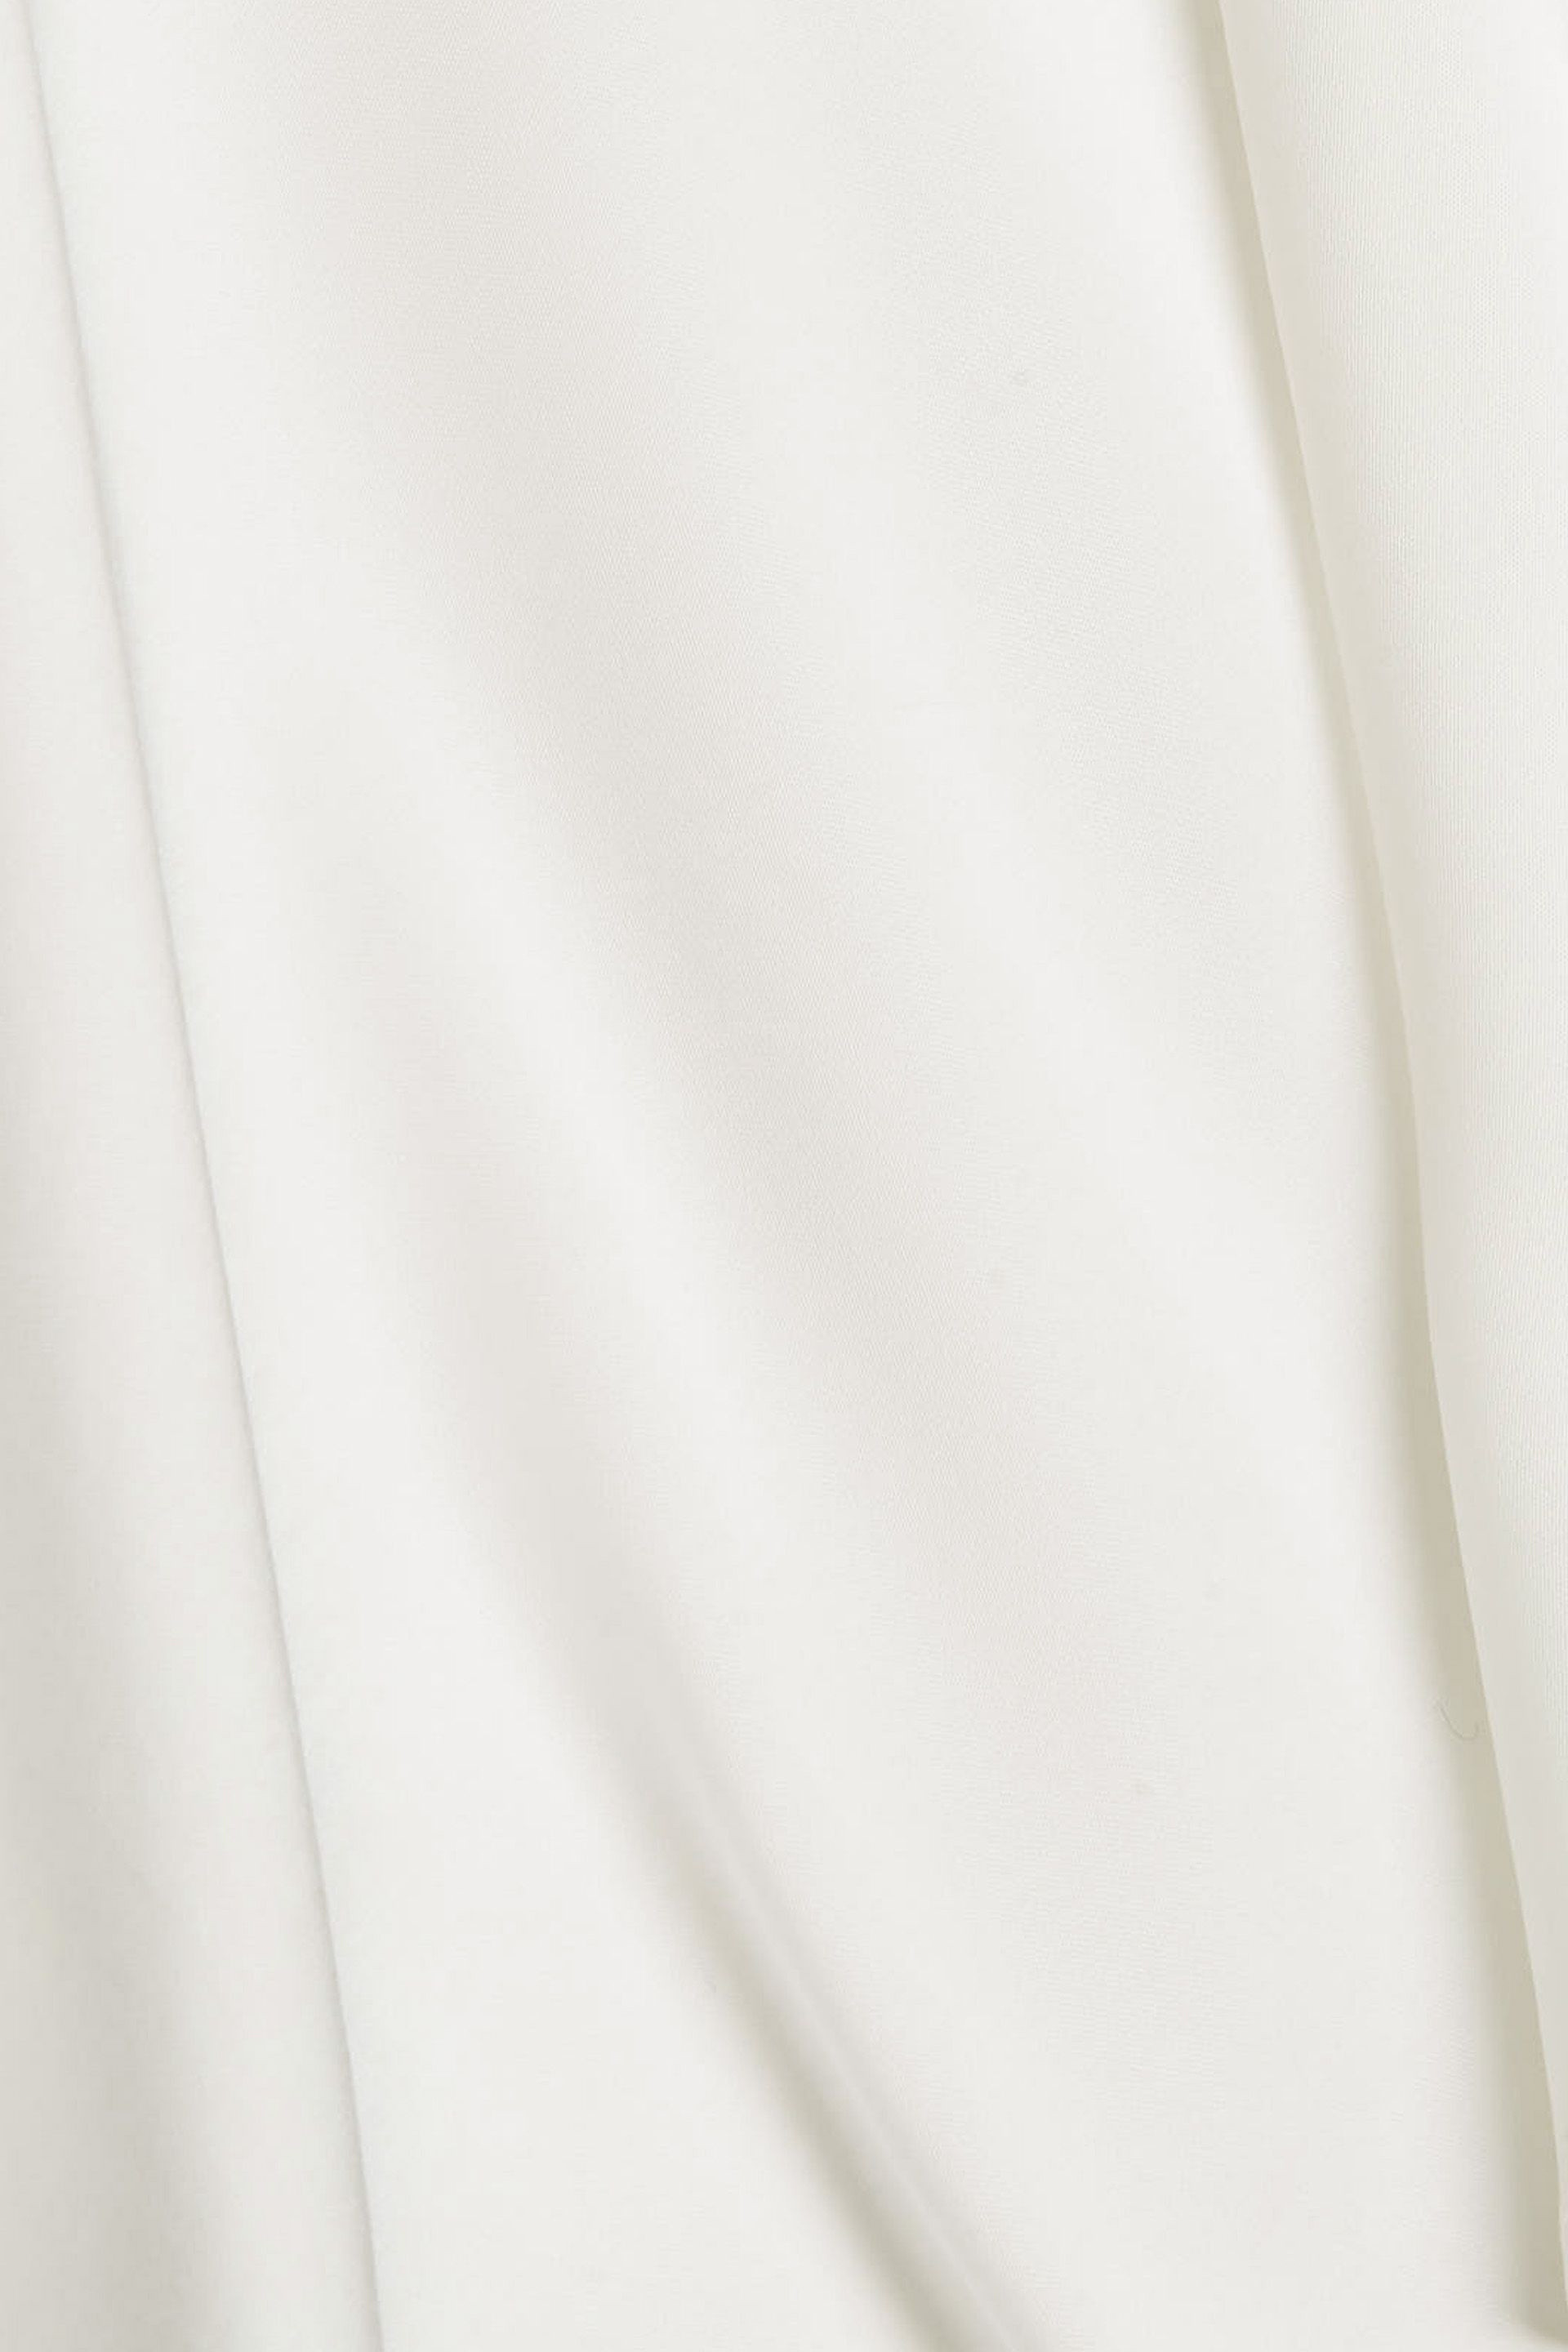 Short-sleeved silk-effect blouse, White, large image number 3